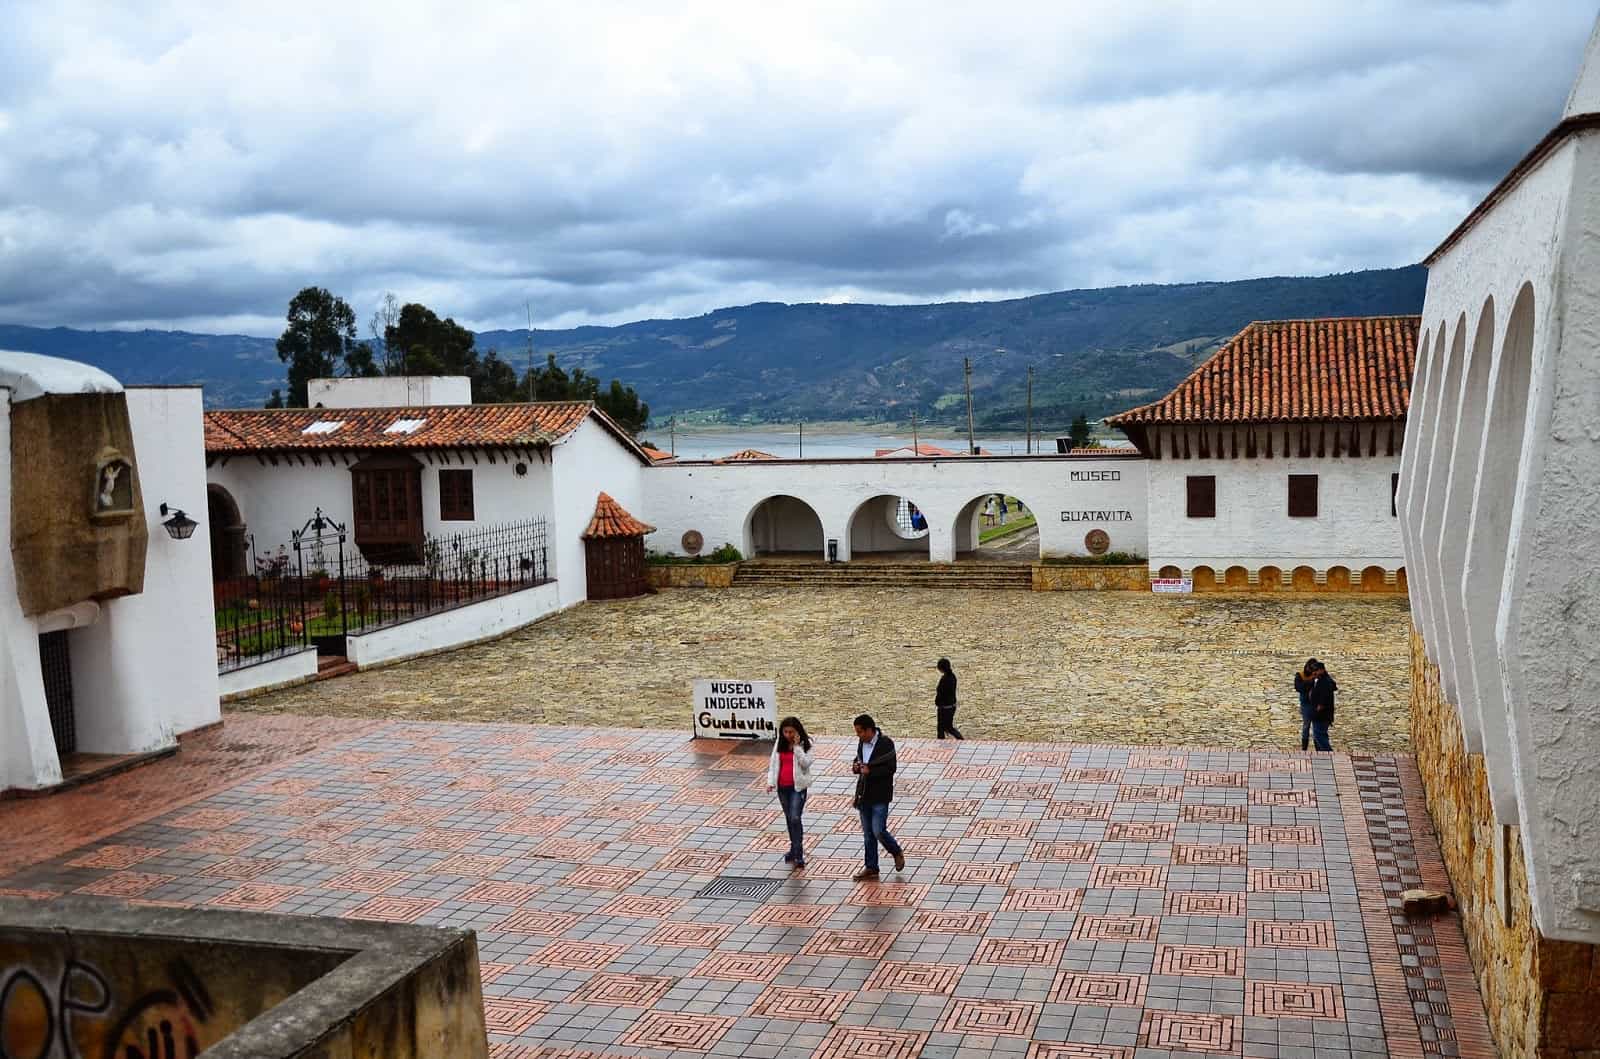 Plaza and museum in Guatavita, Cundinamarca, Colombia